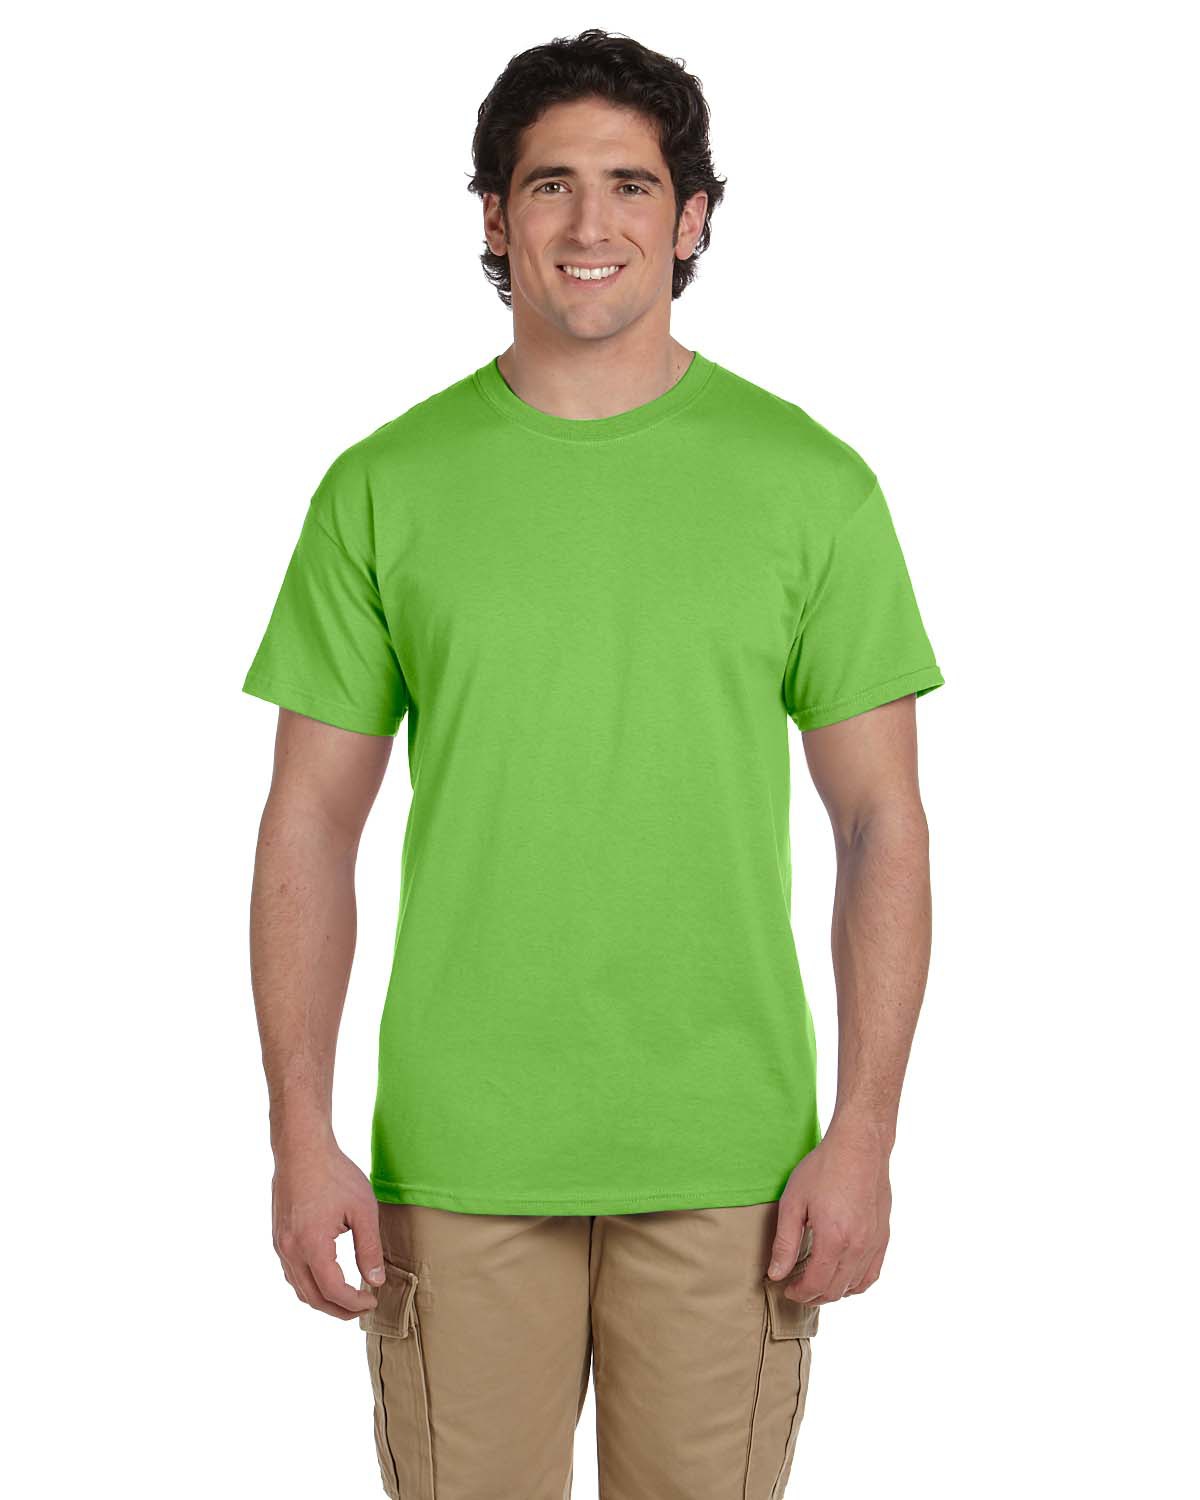 Style # G200 - Original Label Mint Green 4XL - Gildan Adult Ultra Cotton 6 oz T-Shirt 